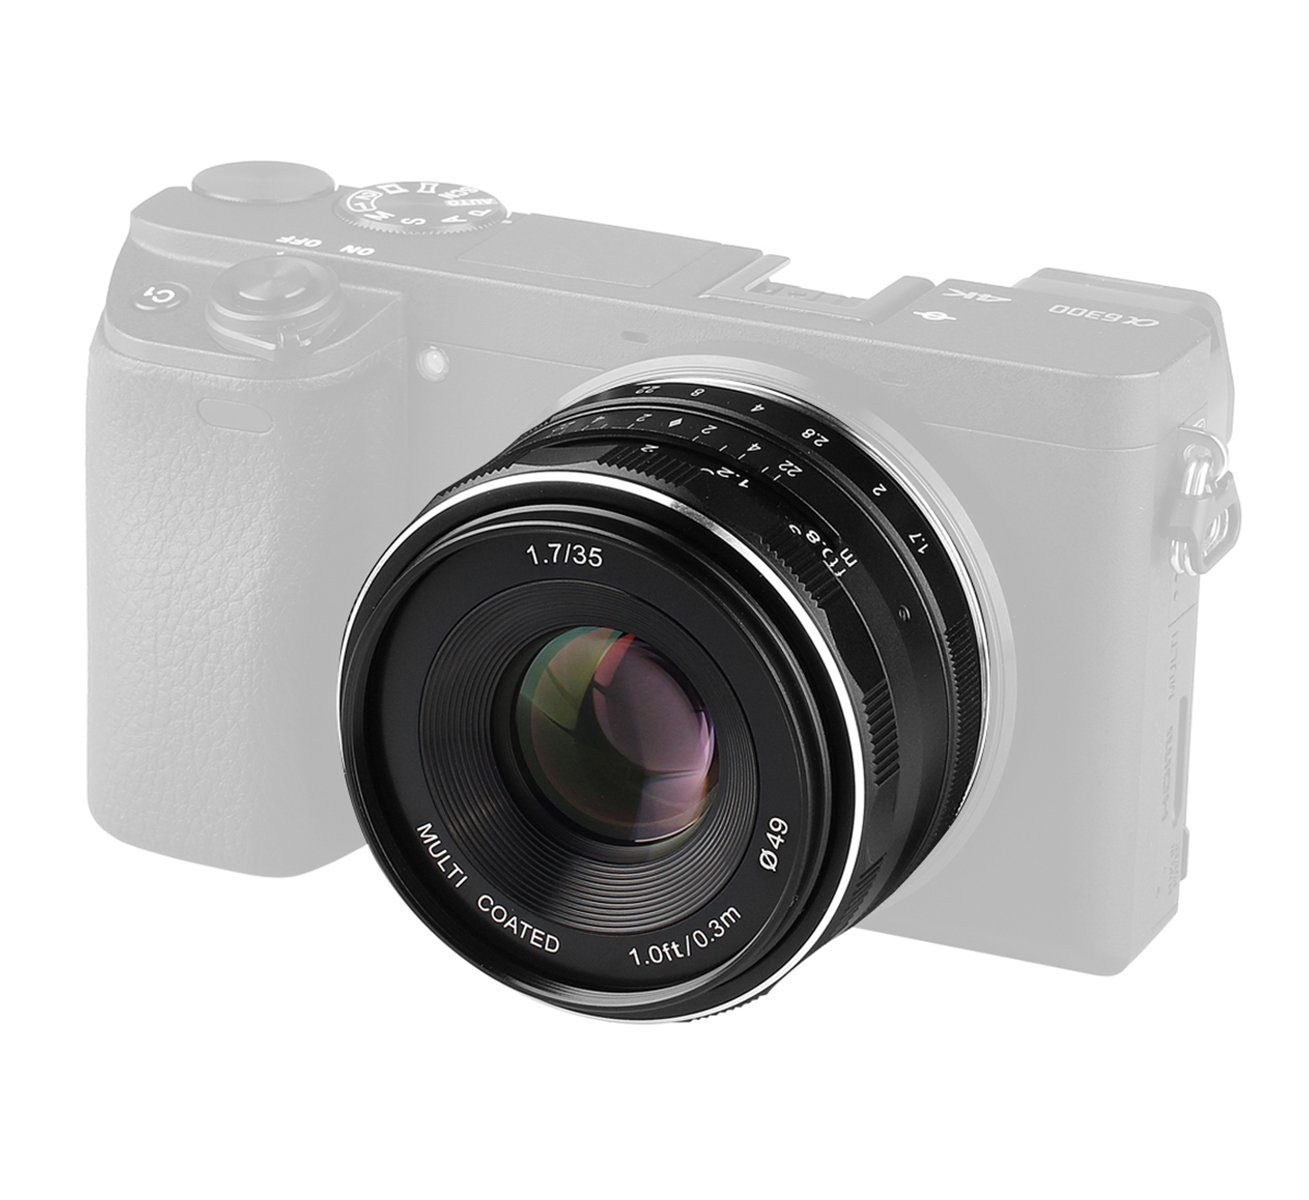 Meike multicoated Canon Objektiv Objektiv für F1.7 35mm Meike M EOS